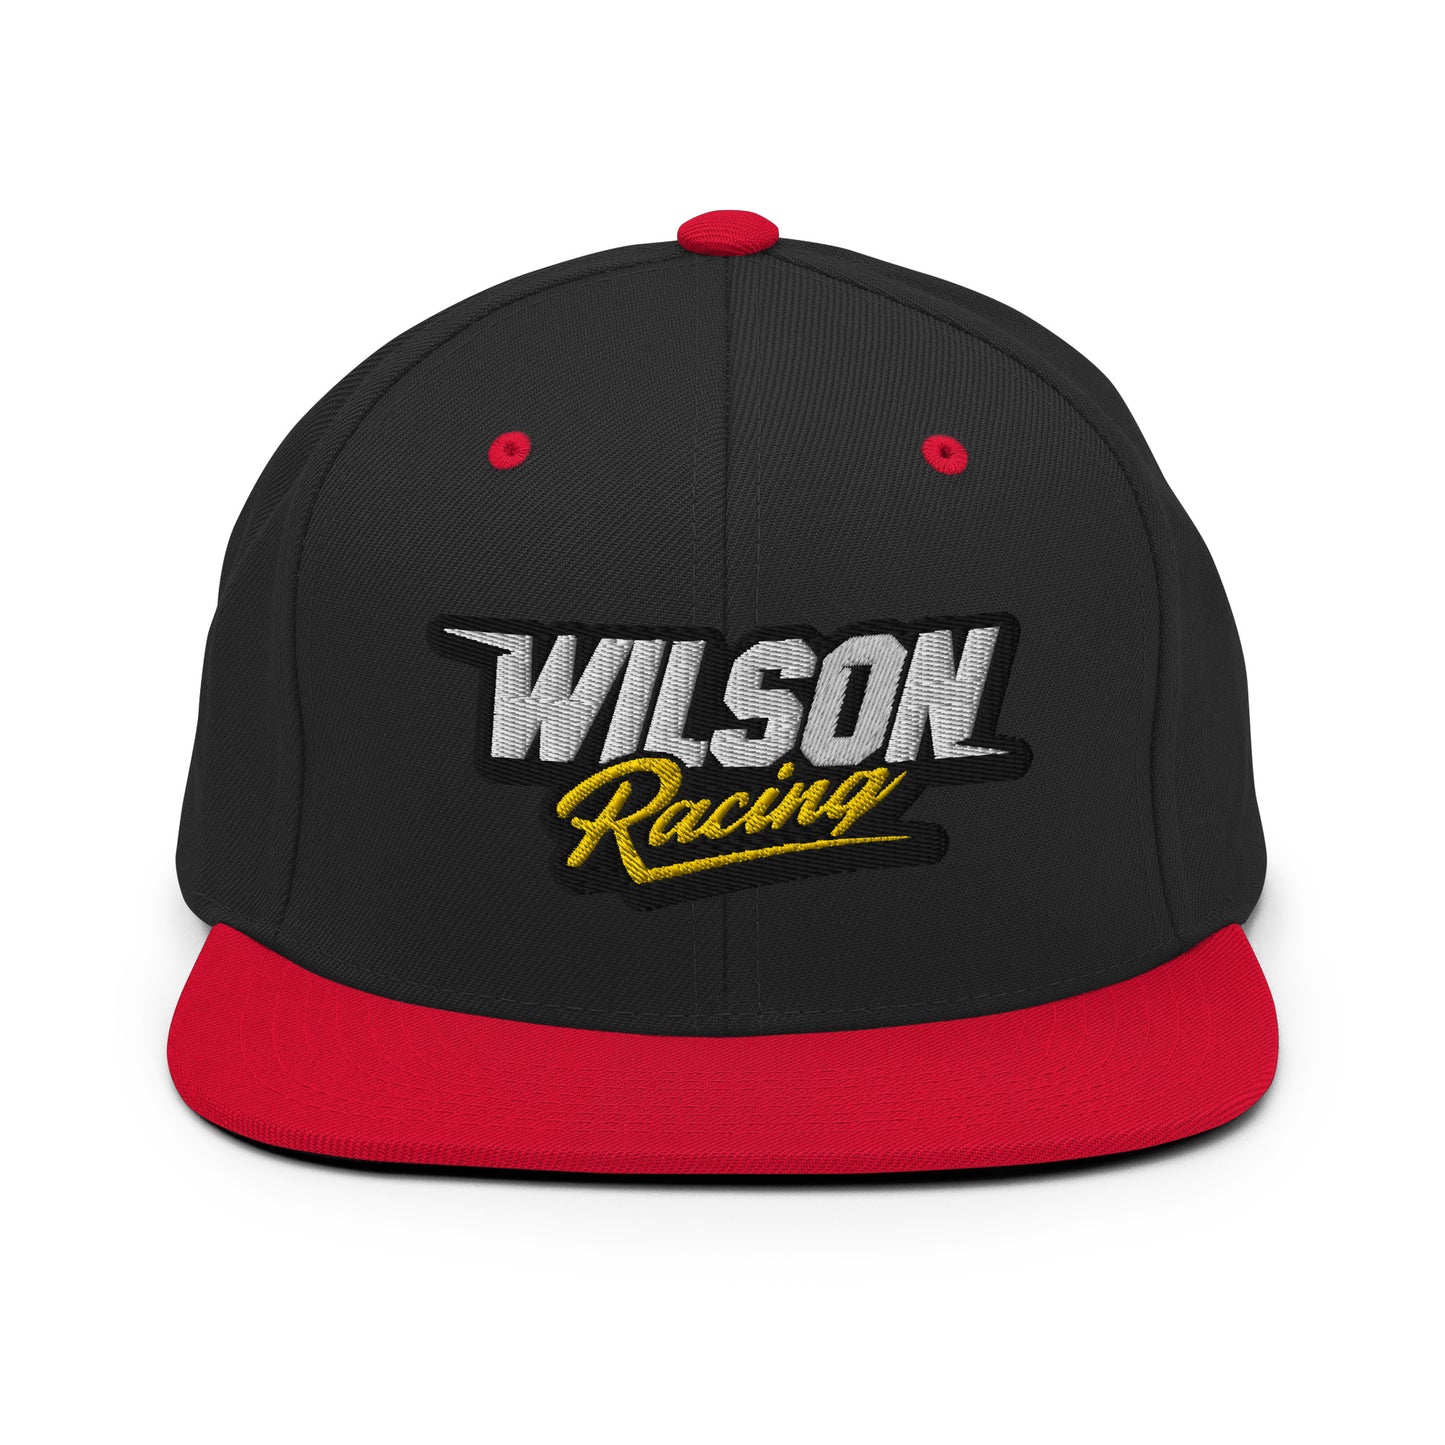 Wilson Racing Logo Snapback Hat